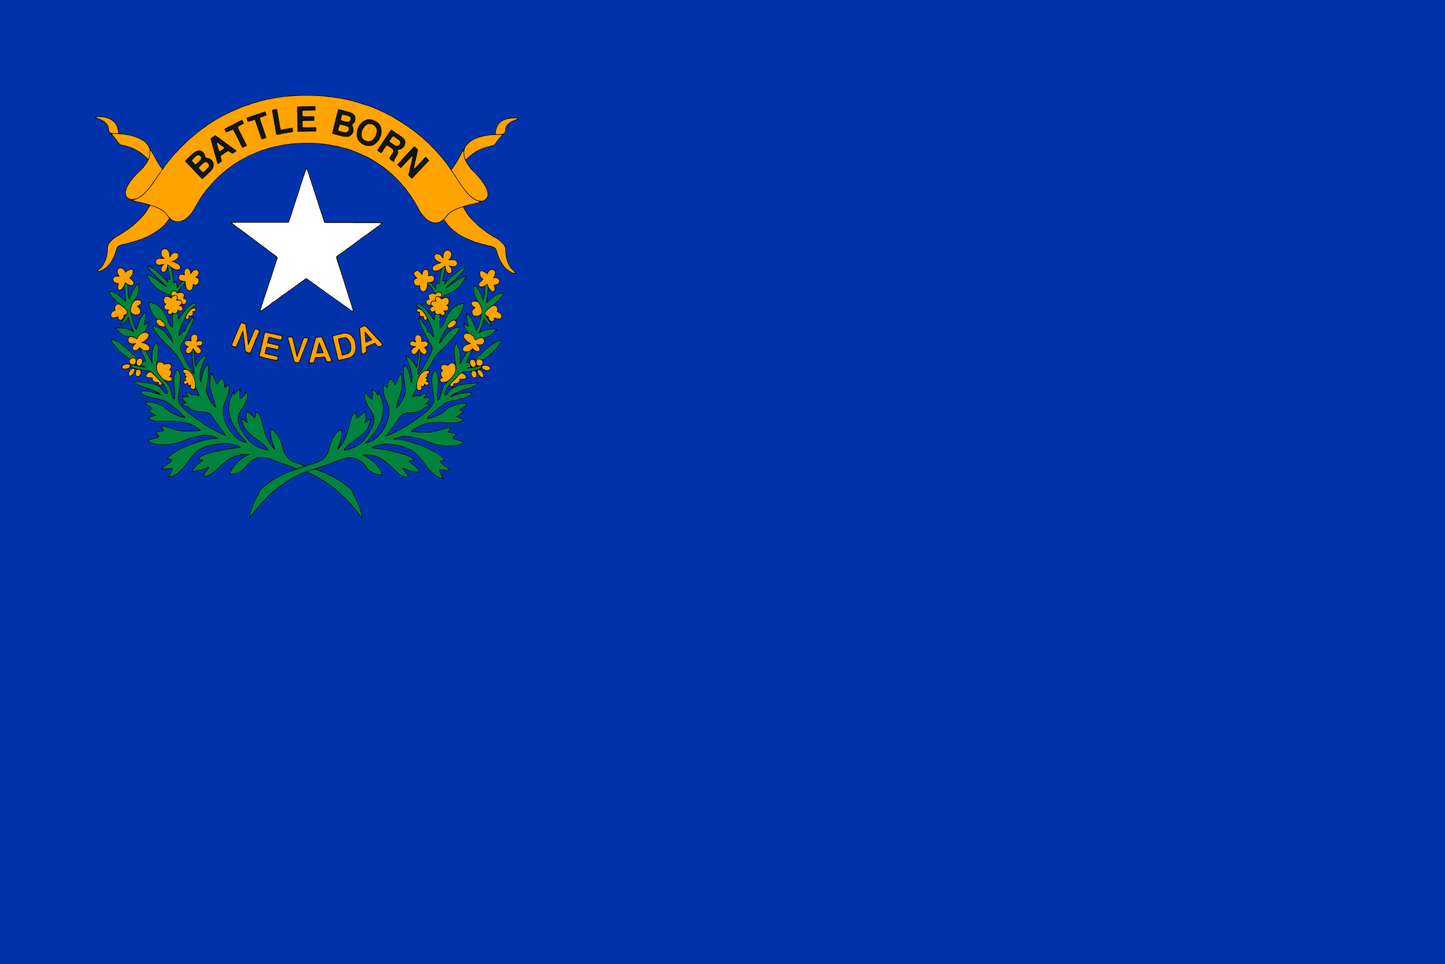 Nevada State Flag - 2x3 Feet